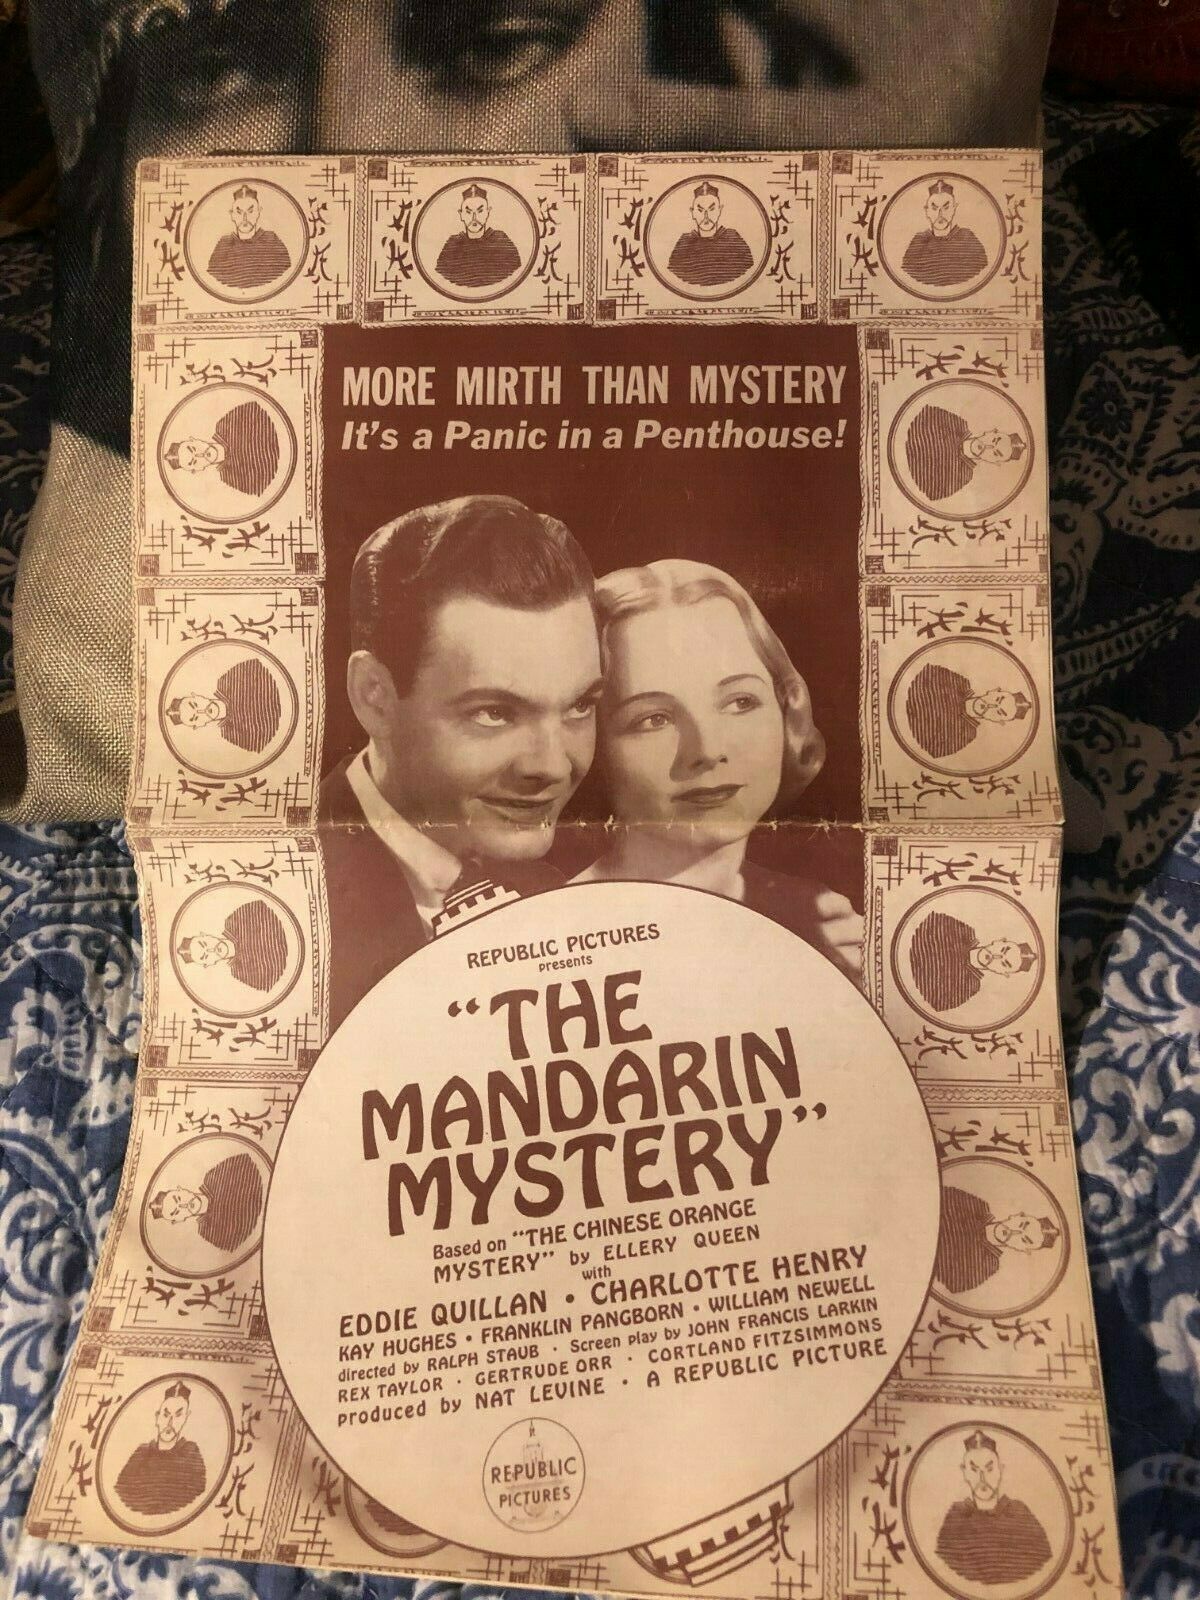 Republic Pictures Presents The Mandarin Mystery{1936) Rare Original Press Sheet